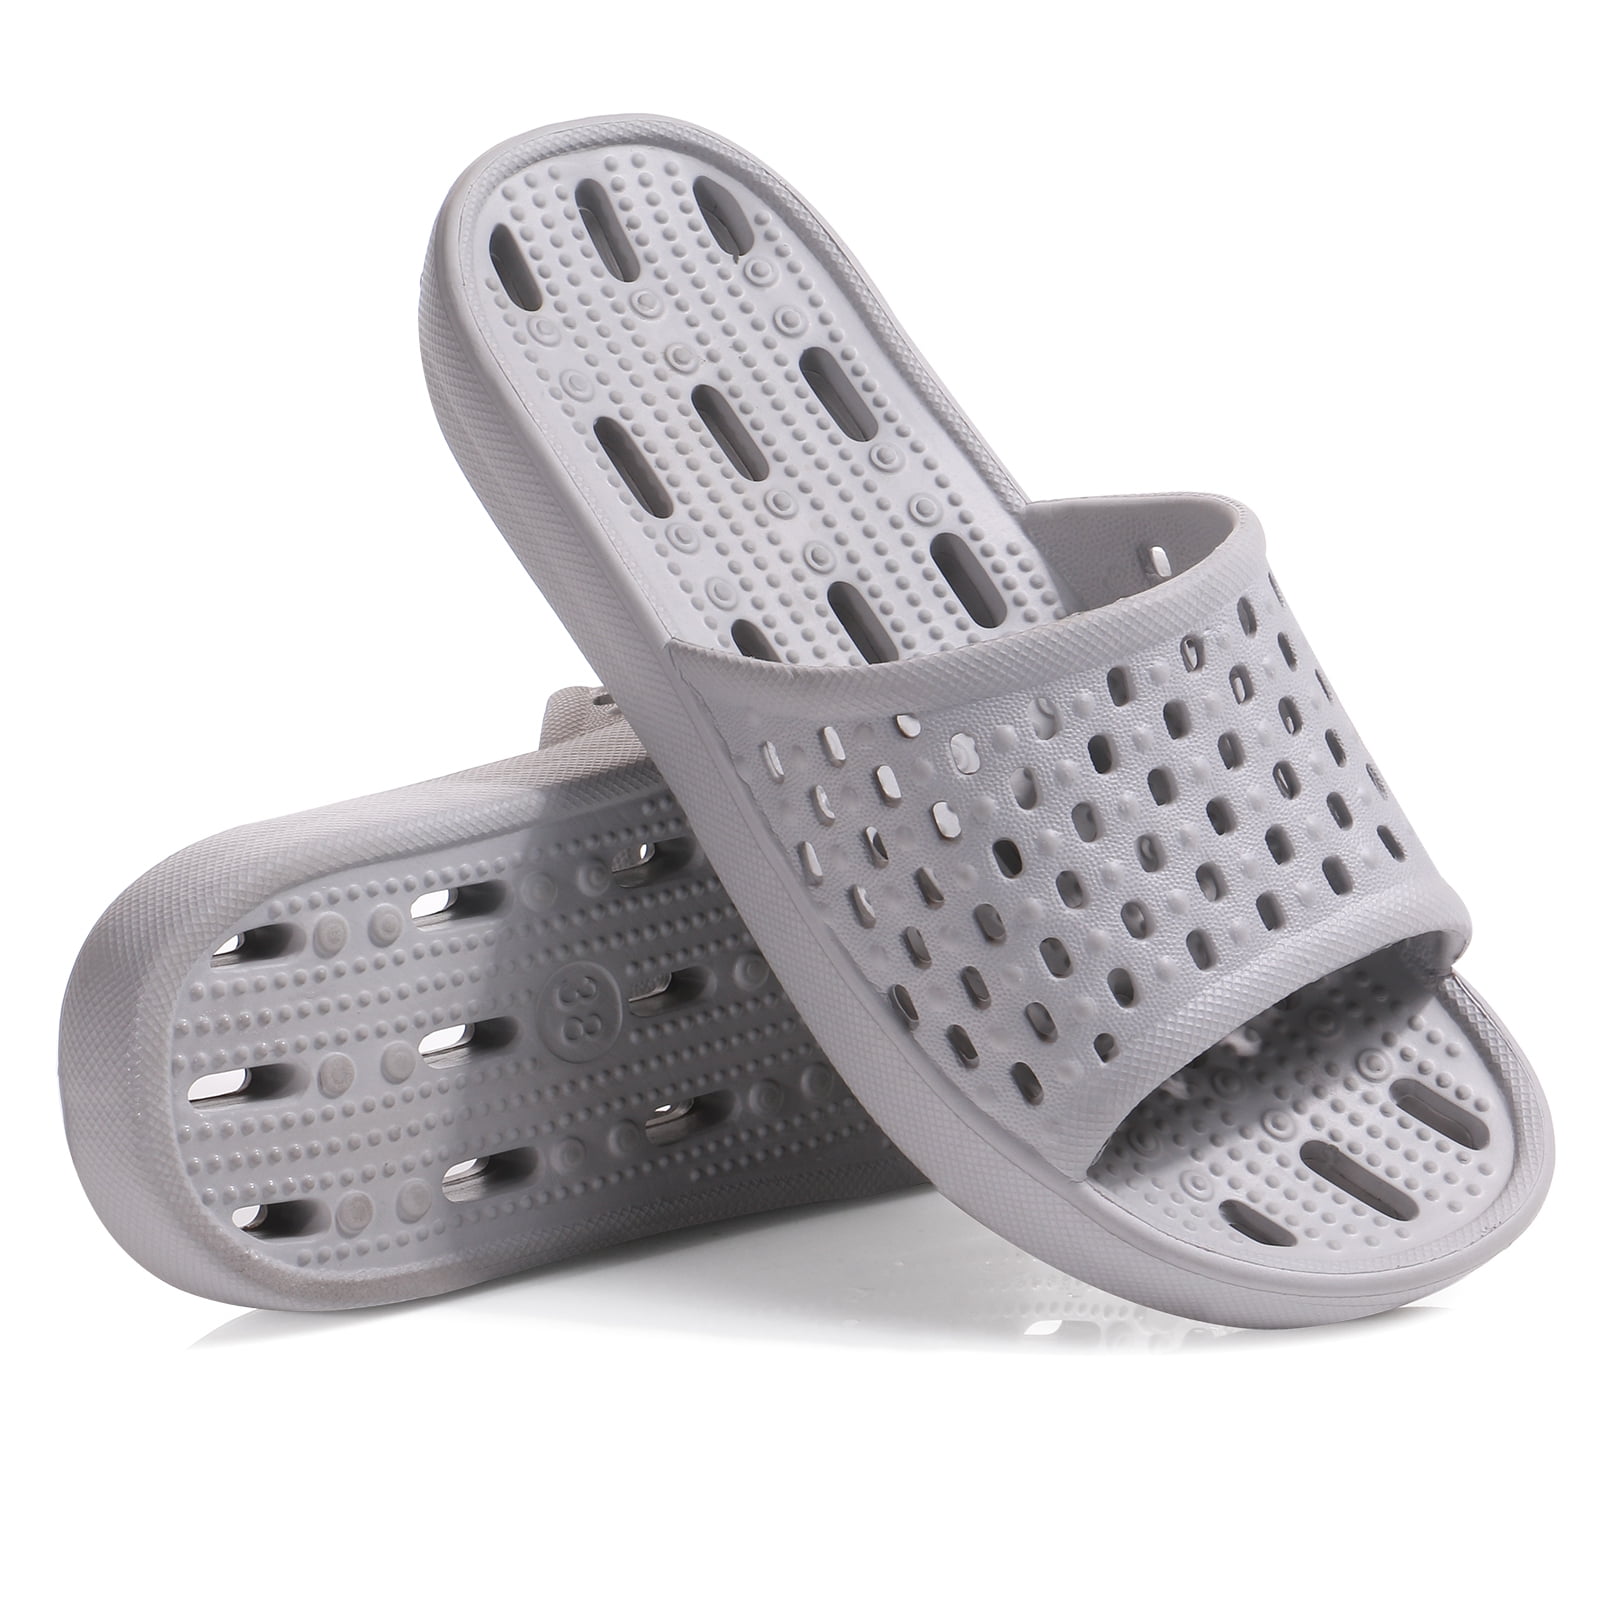 New Shower Bath Slippers Non-Slip Bathroom Sandals Shoes Women